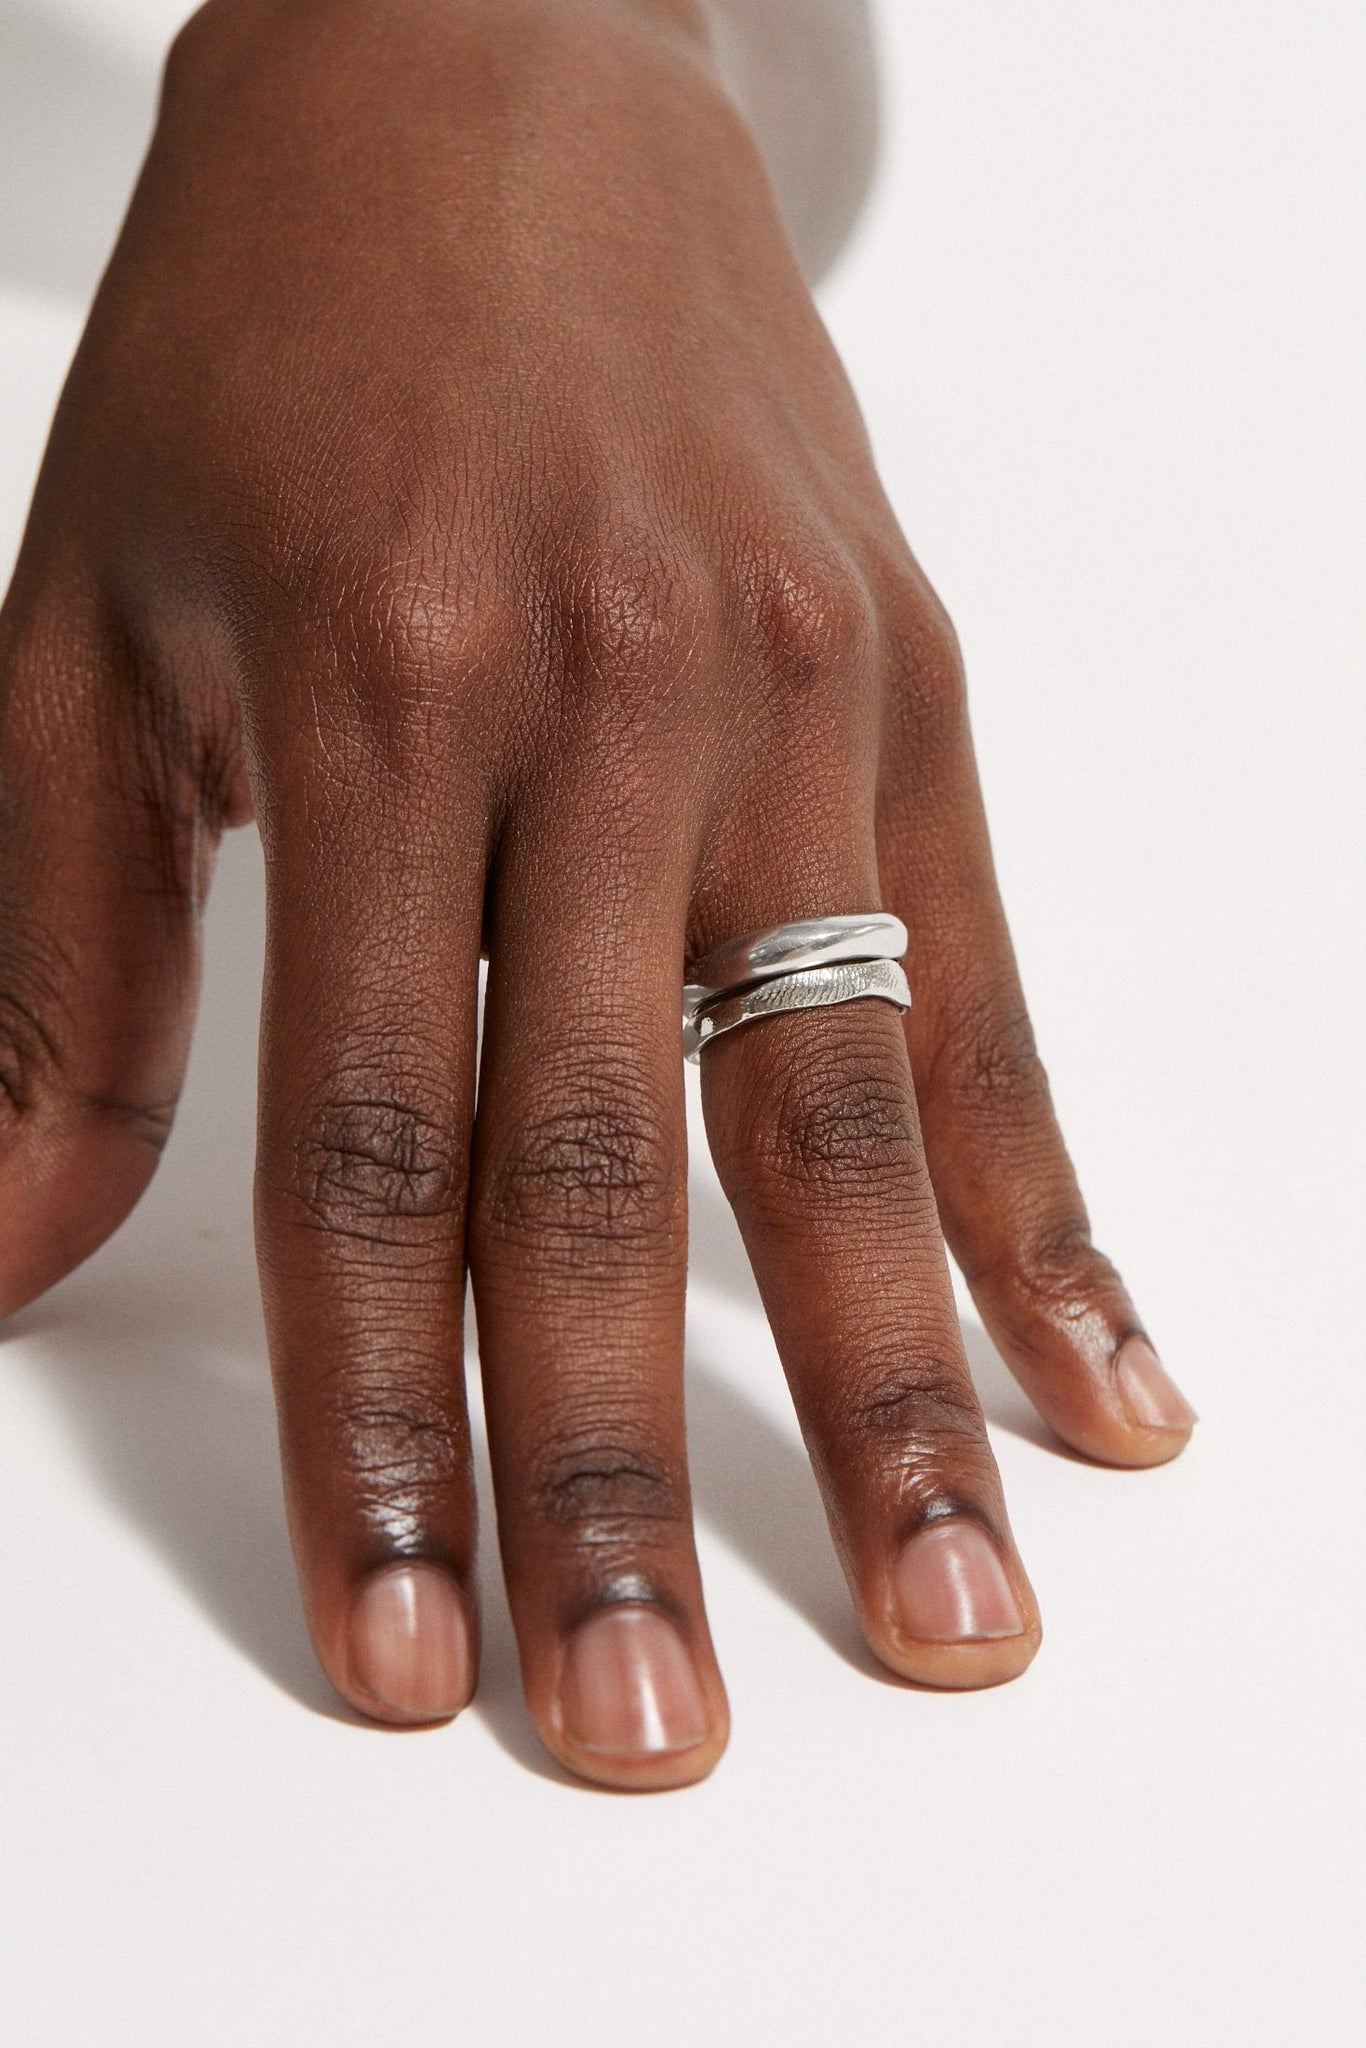 Organic Band Finger Imprinted - Rings - Customised - 2